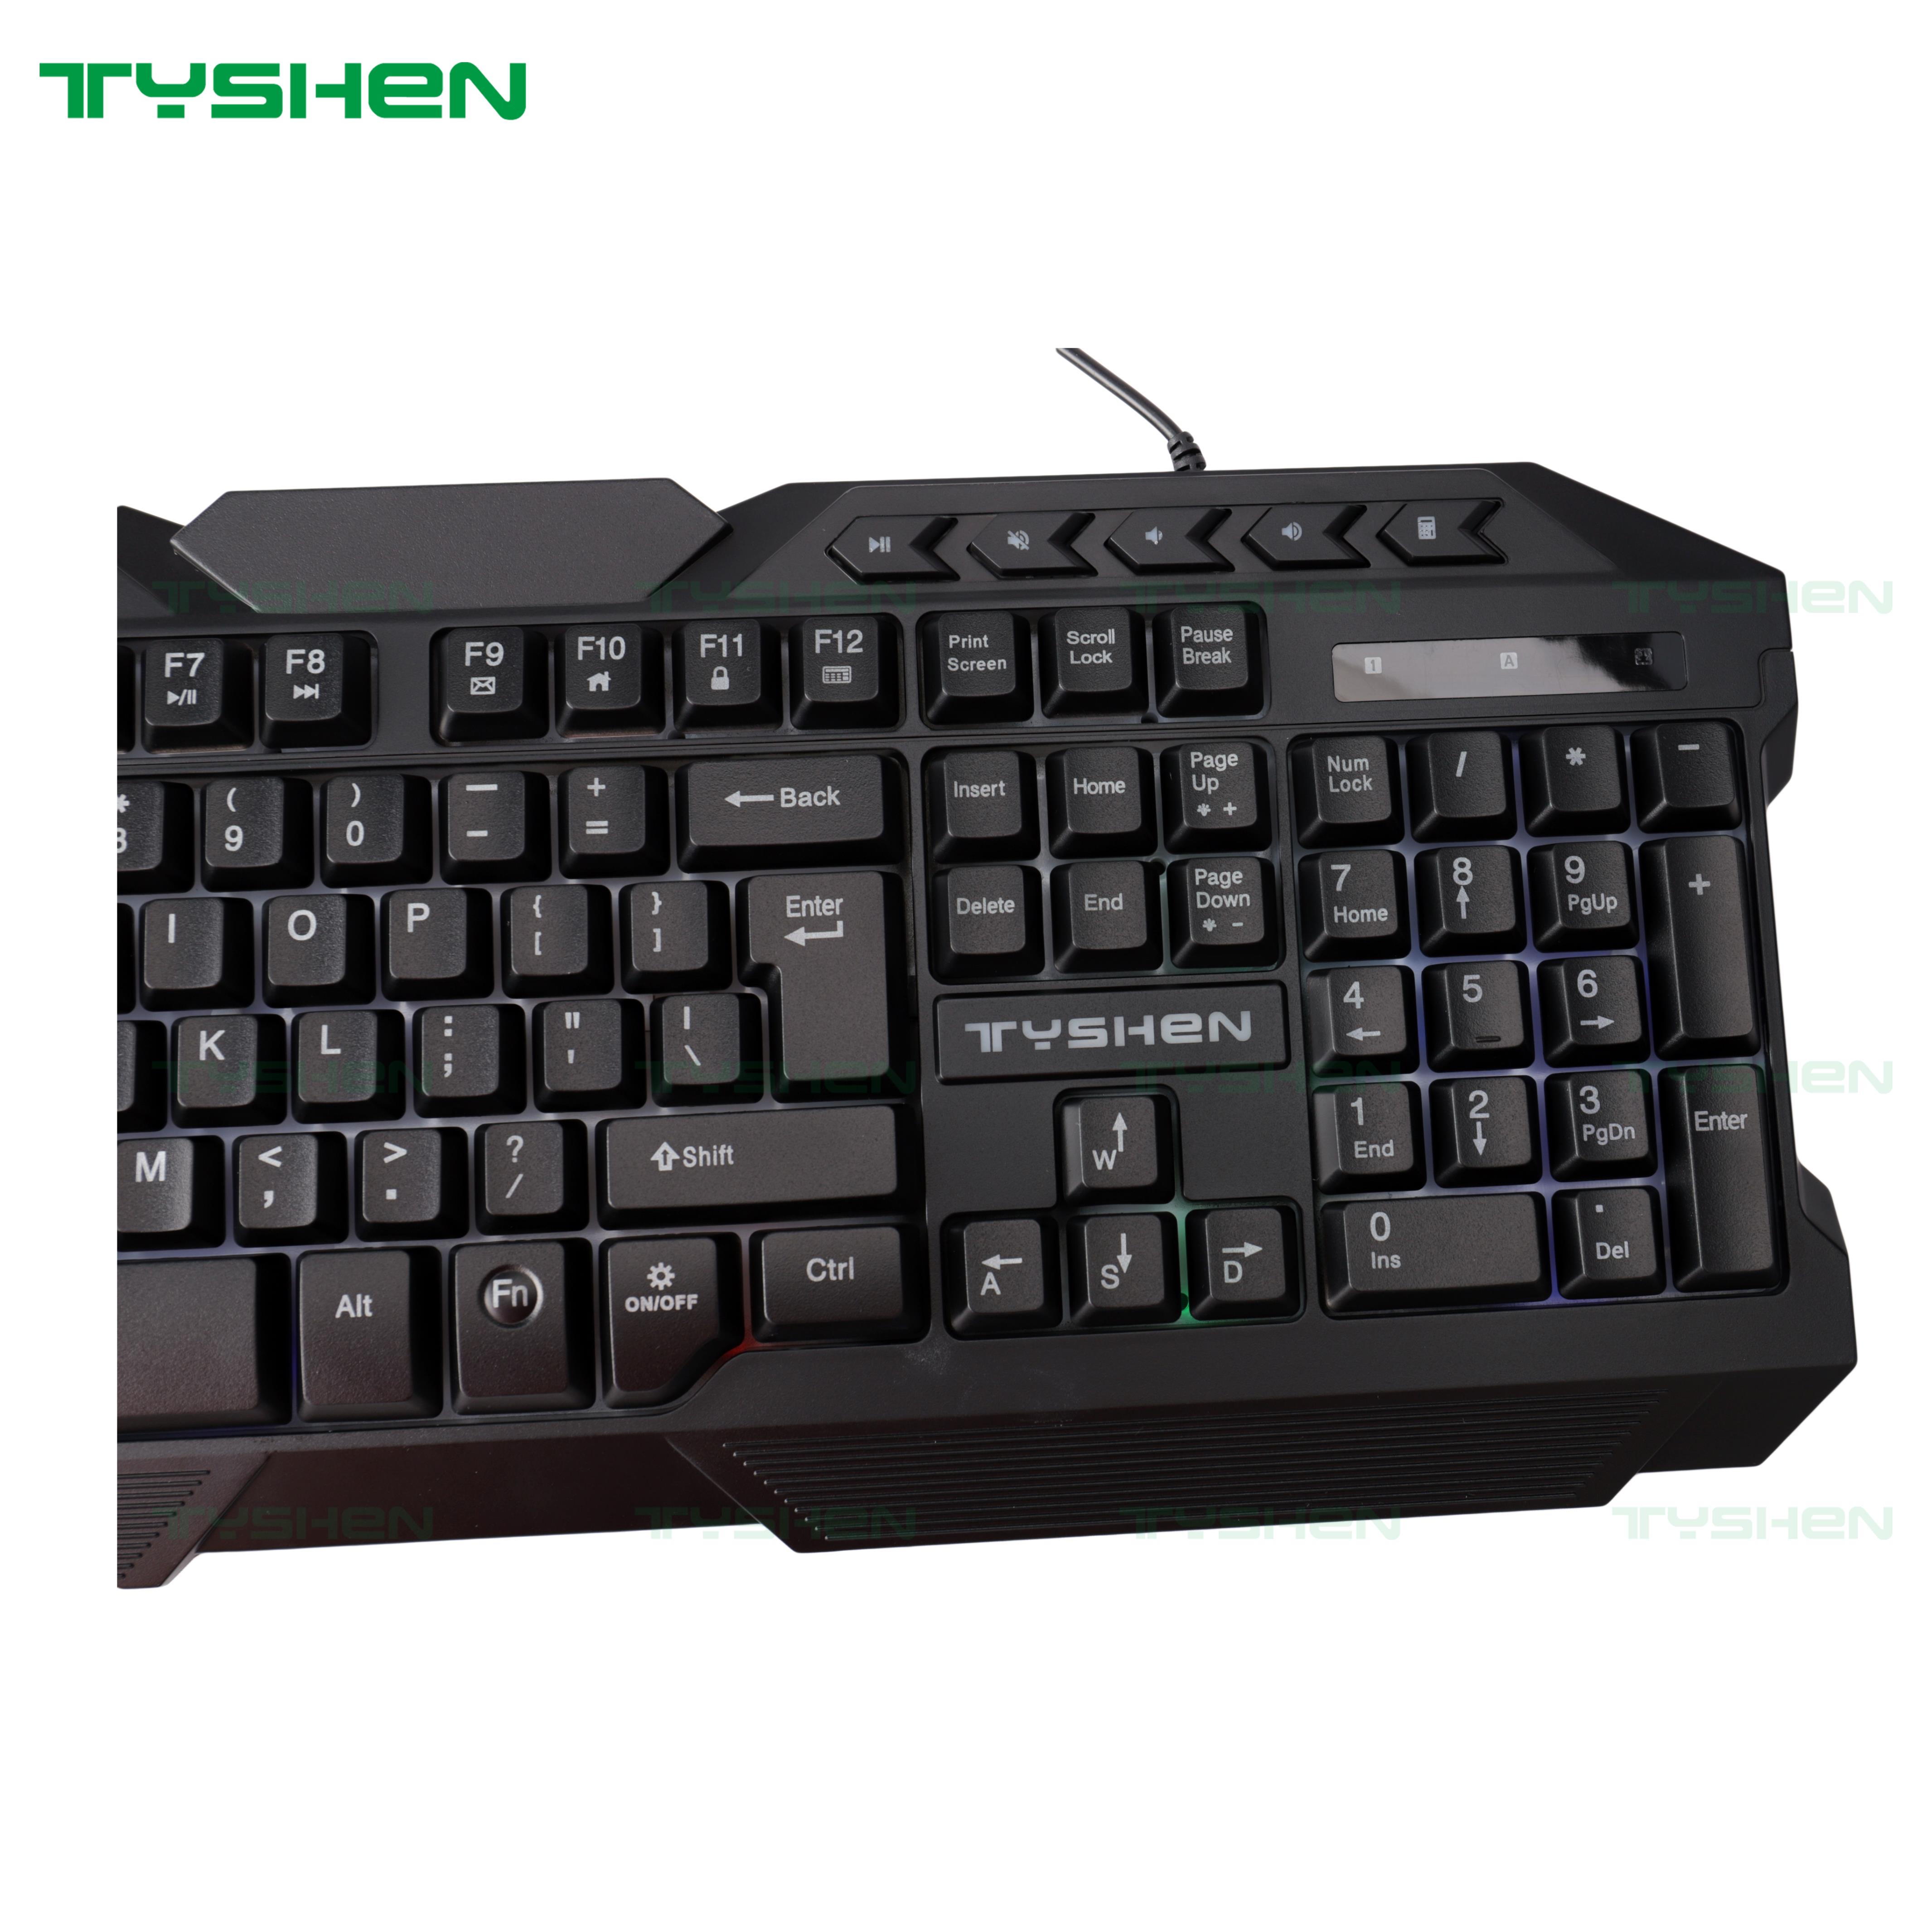 Gaming Keyboard with 10 Hot Keys,Flat Key Design